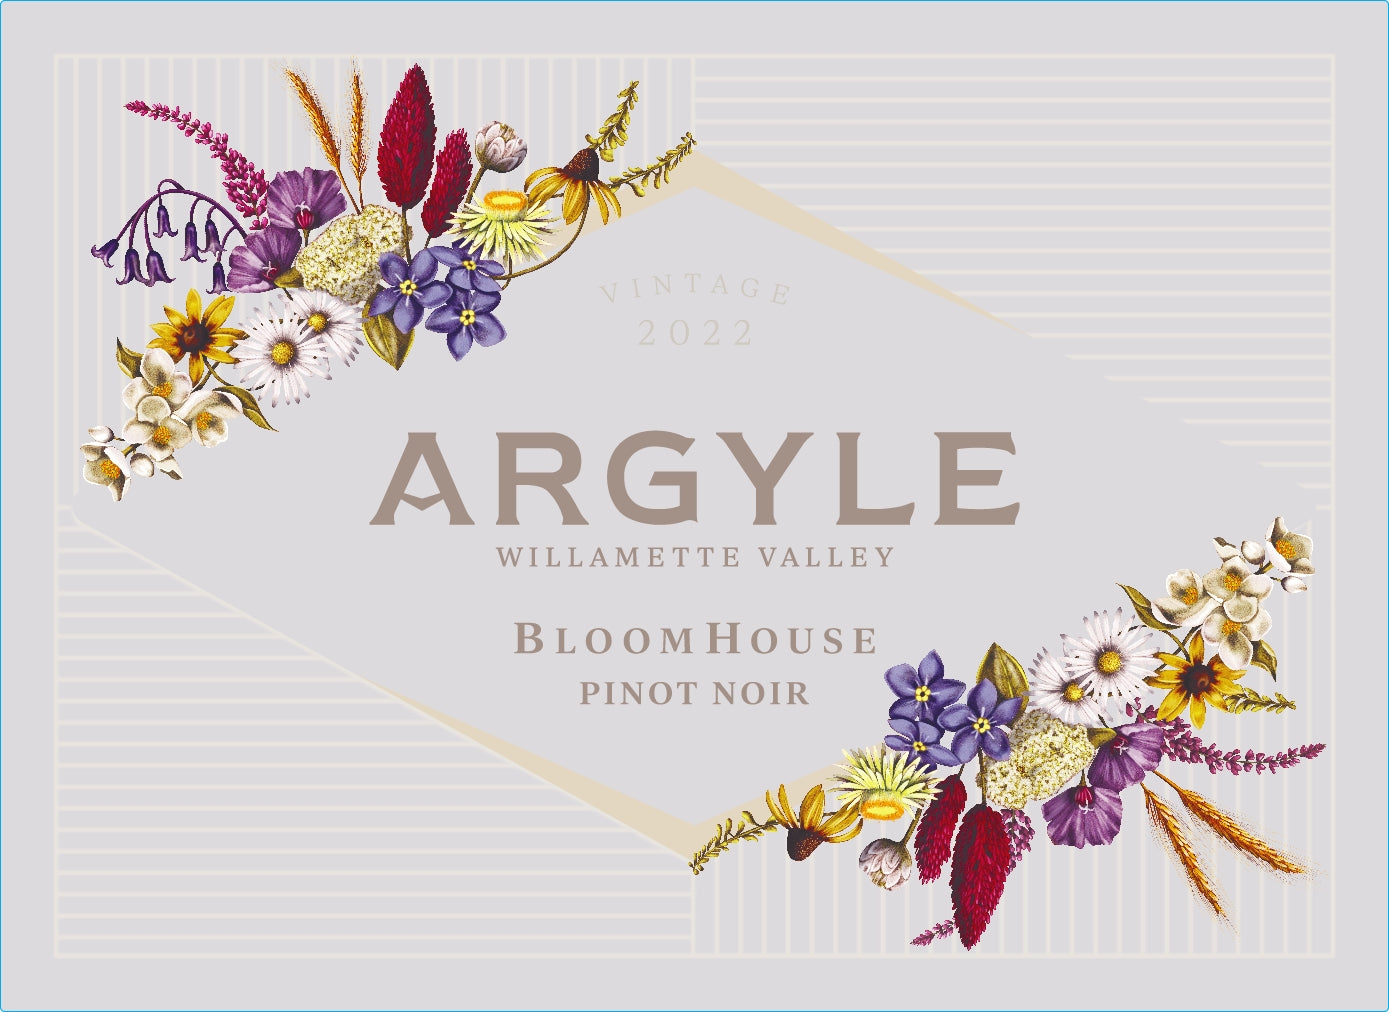 Bloomhouse Argyle Wine label illustrations by Kelly Thompson